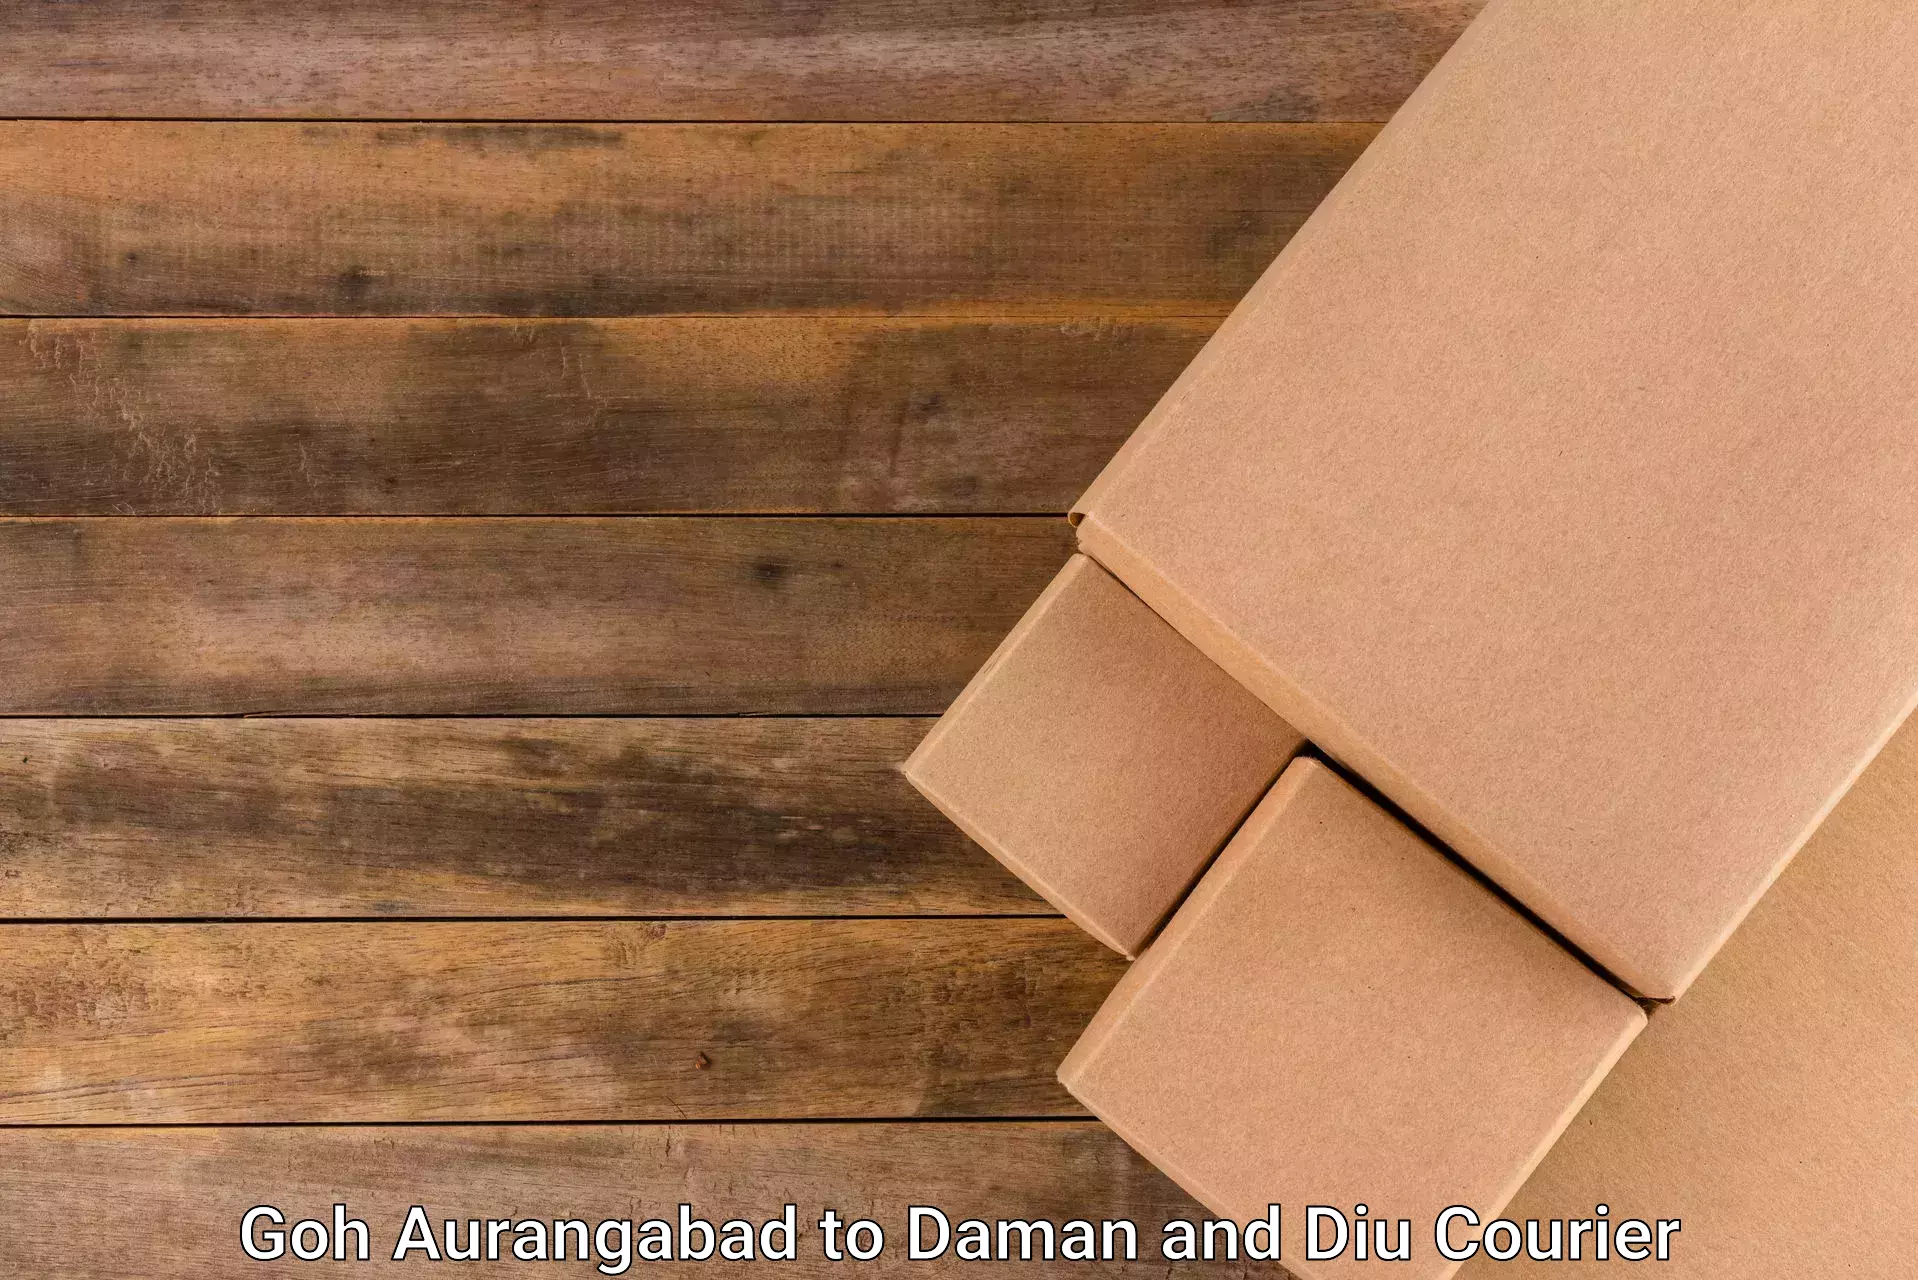 24/7 courier service Goh Aurangabad to Daman